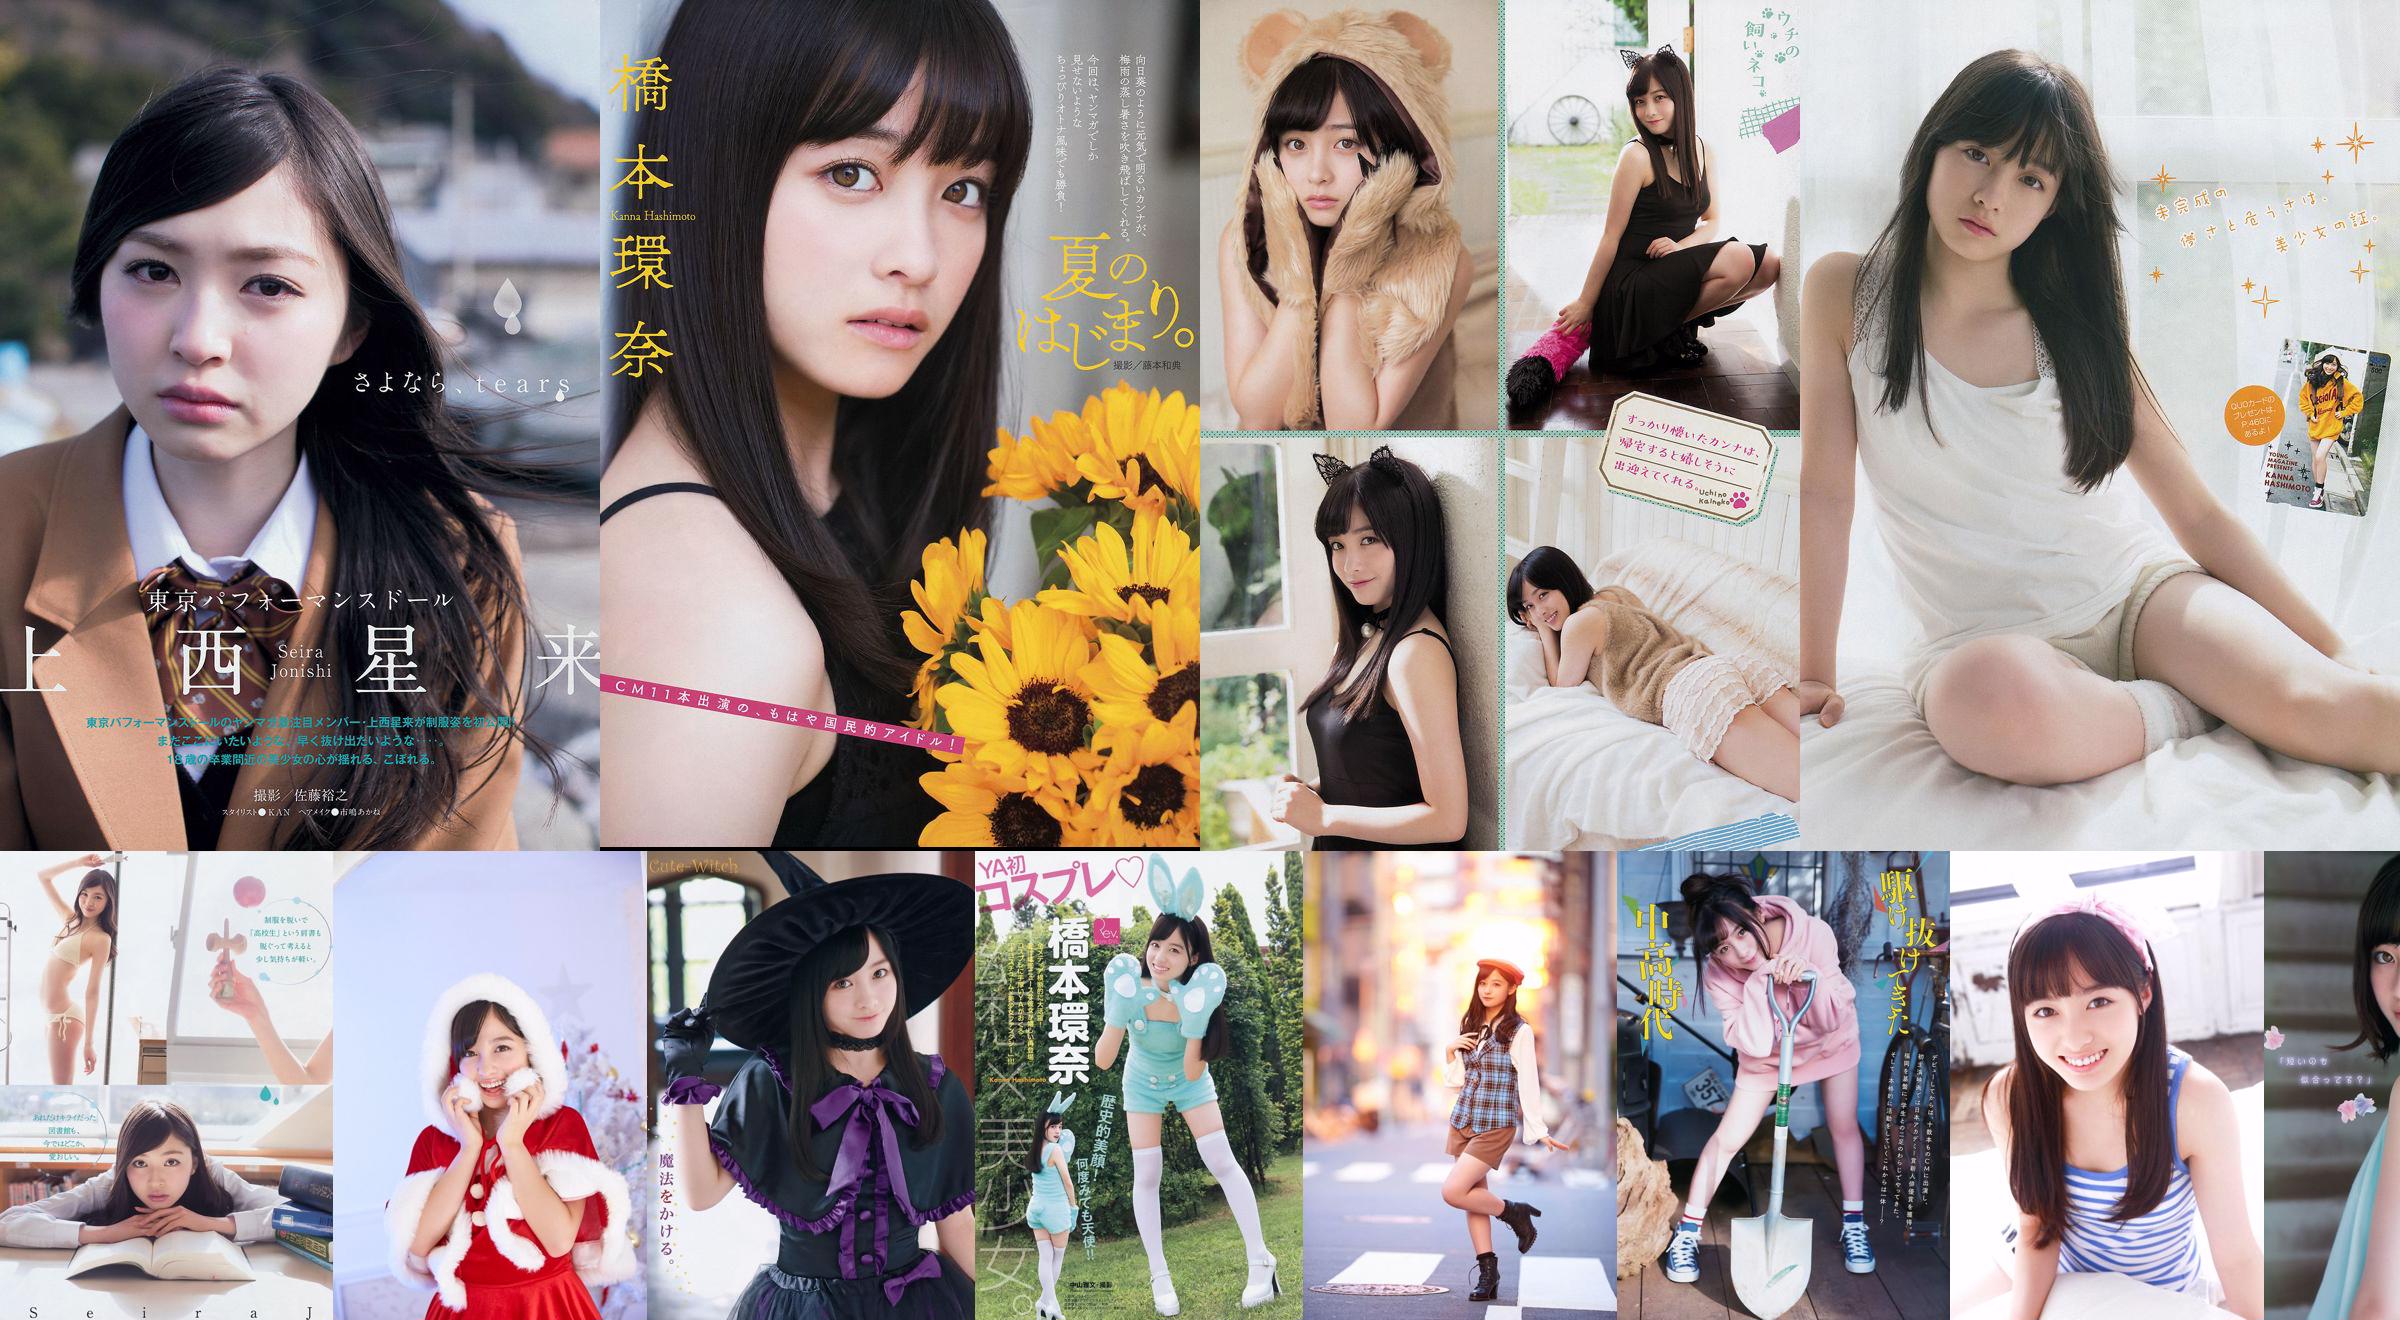 [Young Magazine] Канна Хашимото СКАНДАЛ Tokyo Girls 'Style 2015 № 01 Фотография No.c84229 Страница 4